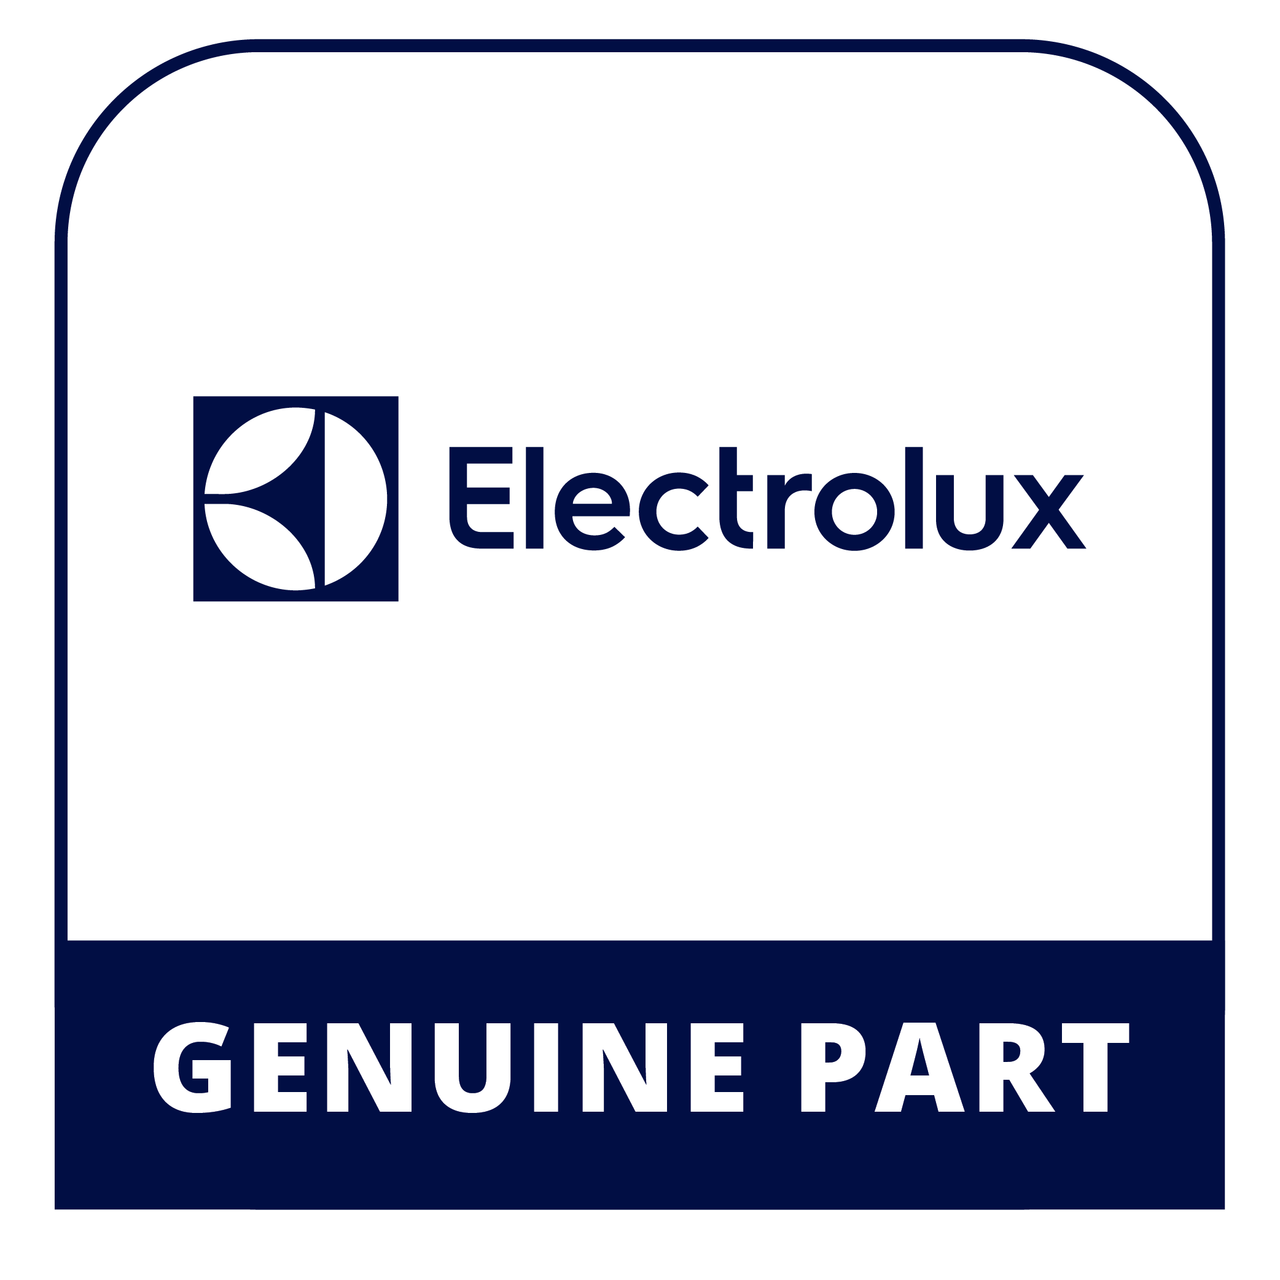 Frigidaire - Electrolux 316466100 Label - Genuine Electrolux Part